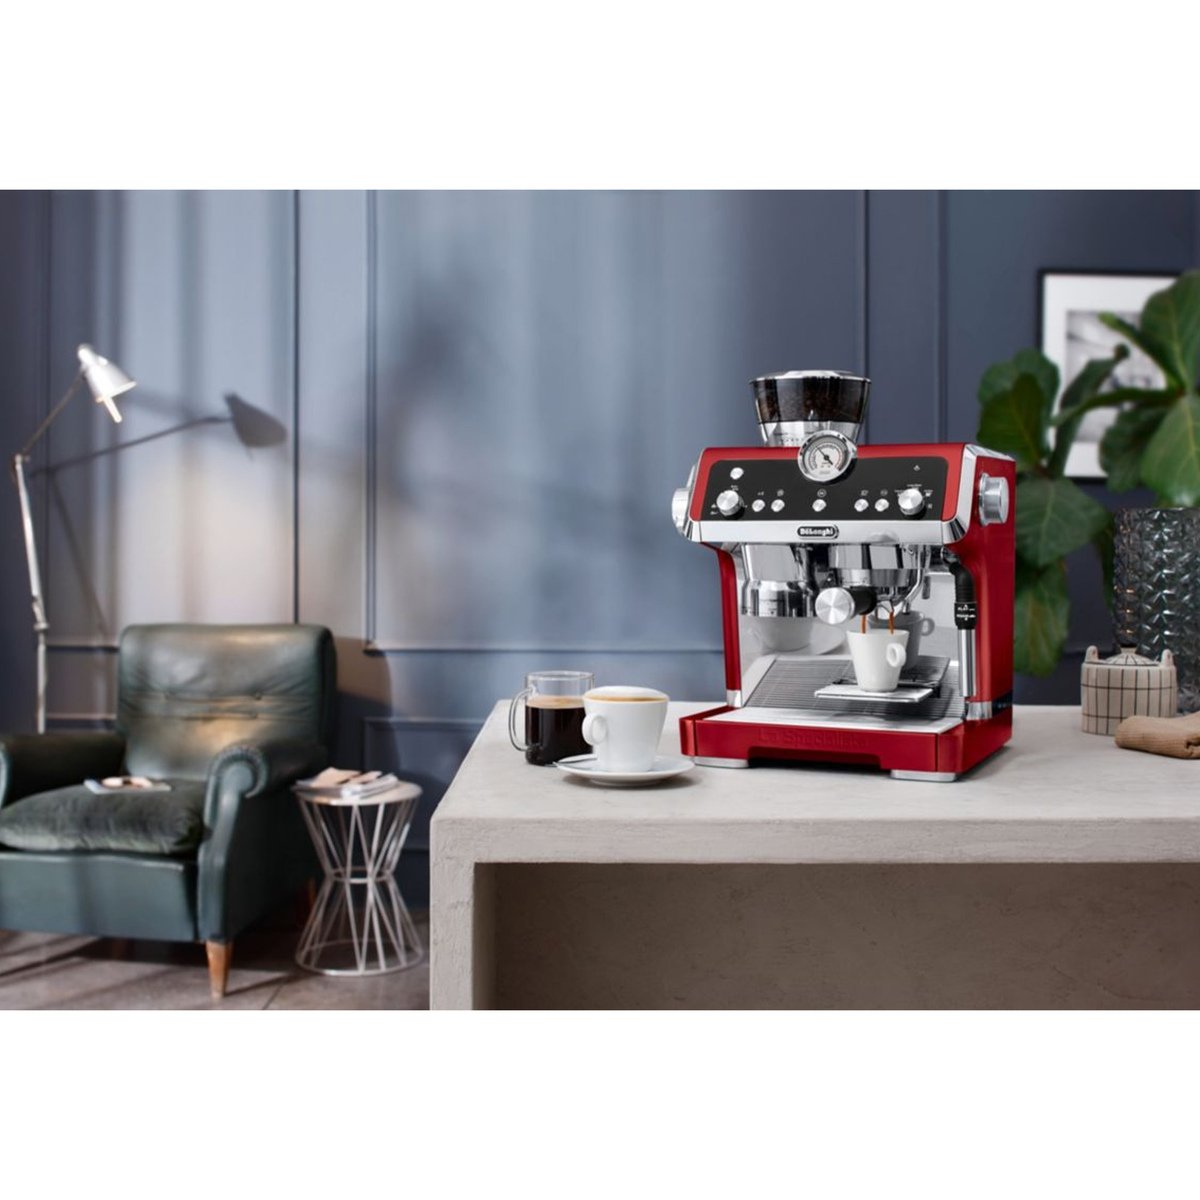 Delonghi Espresso Coffee Maker EC9335 Red